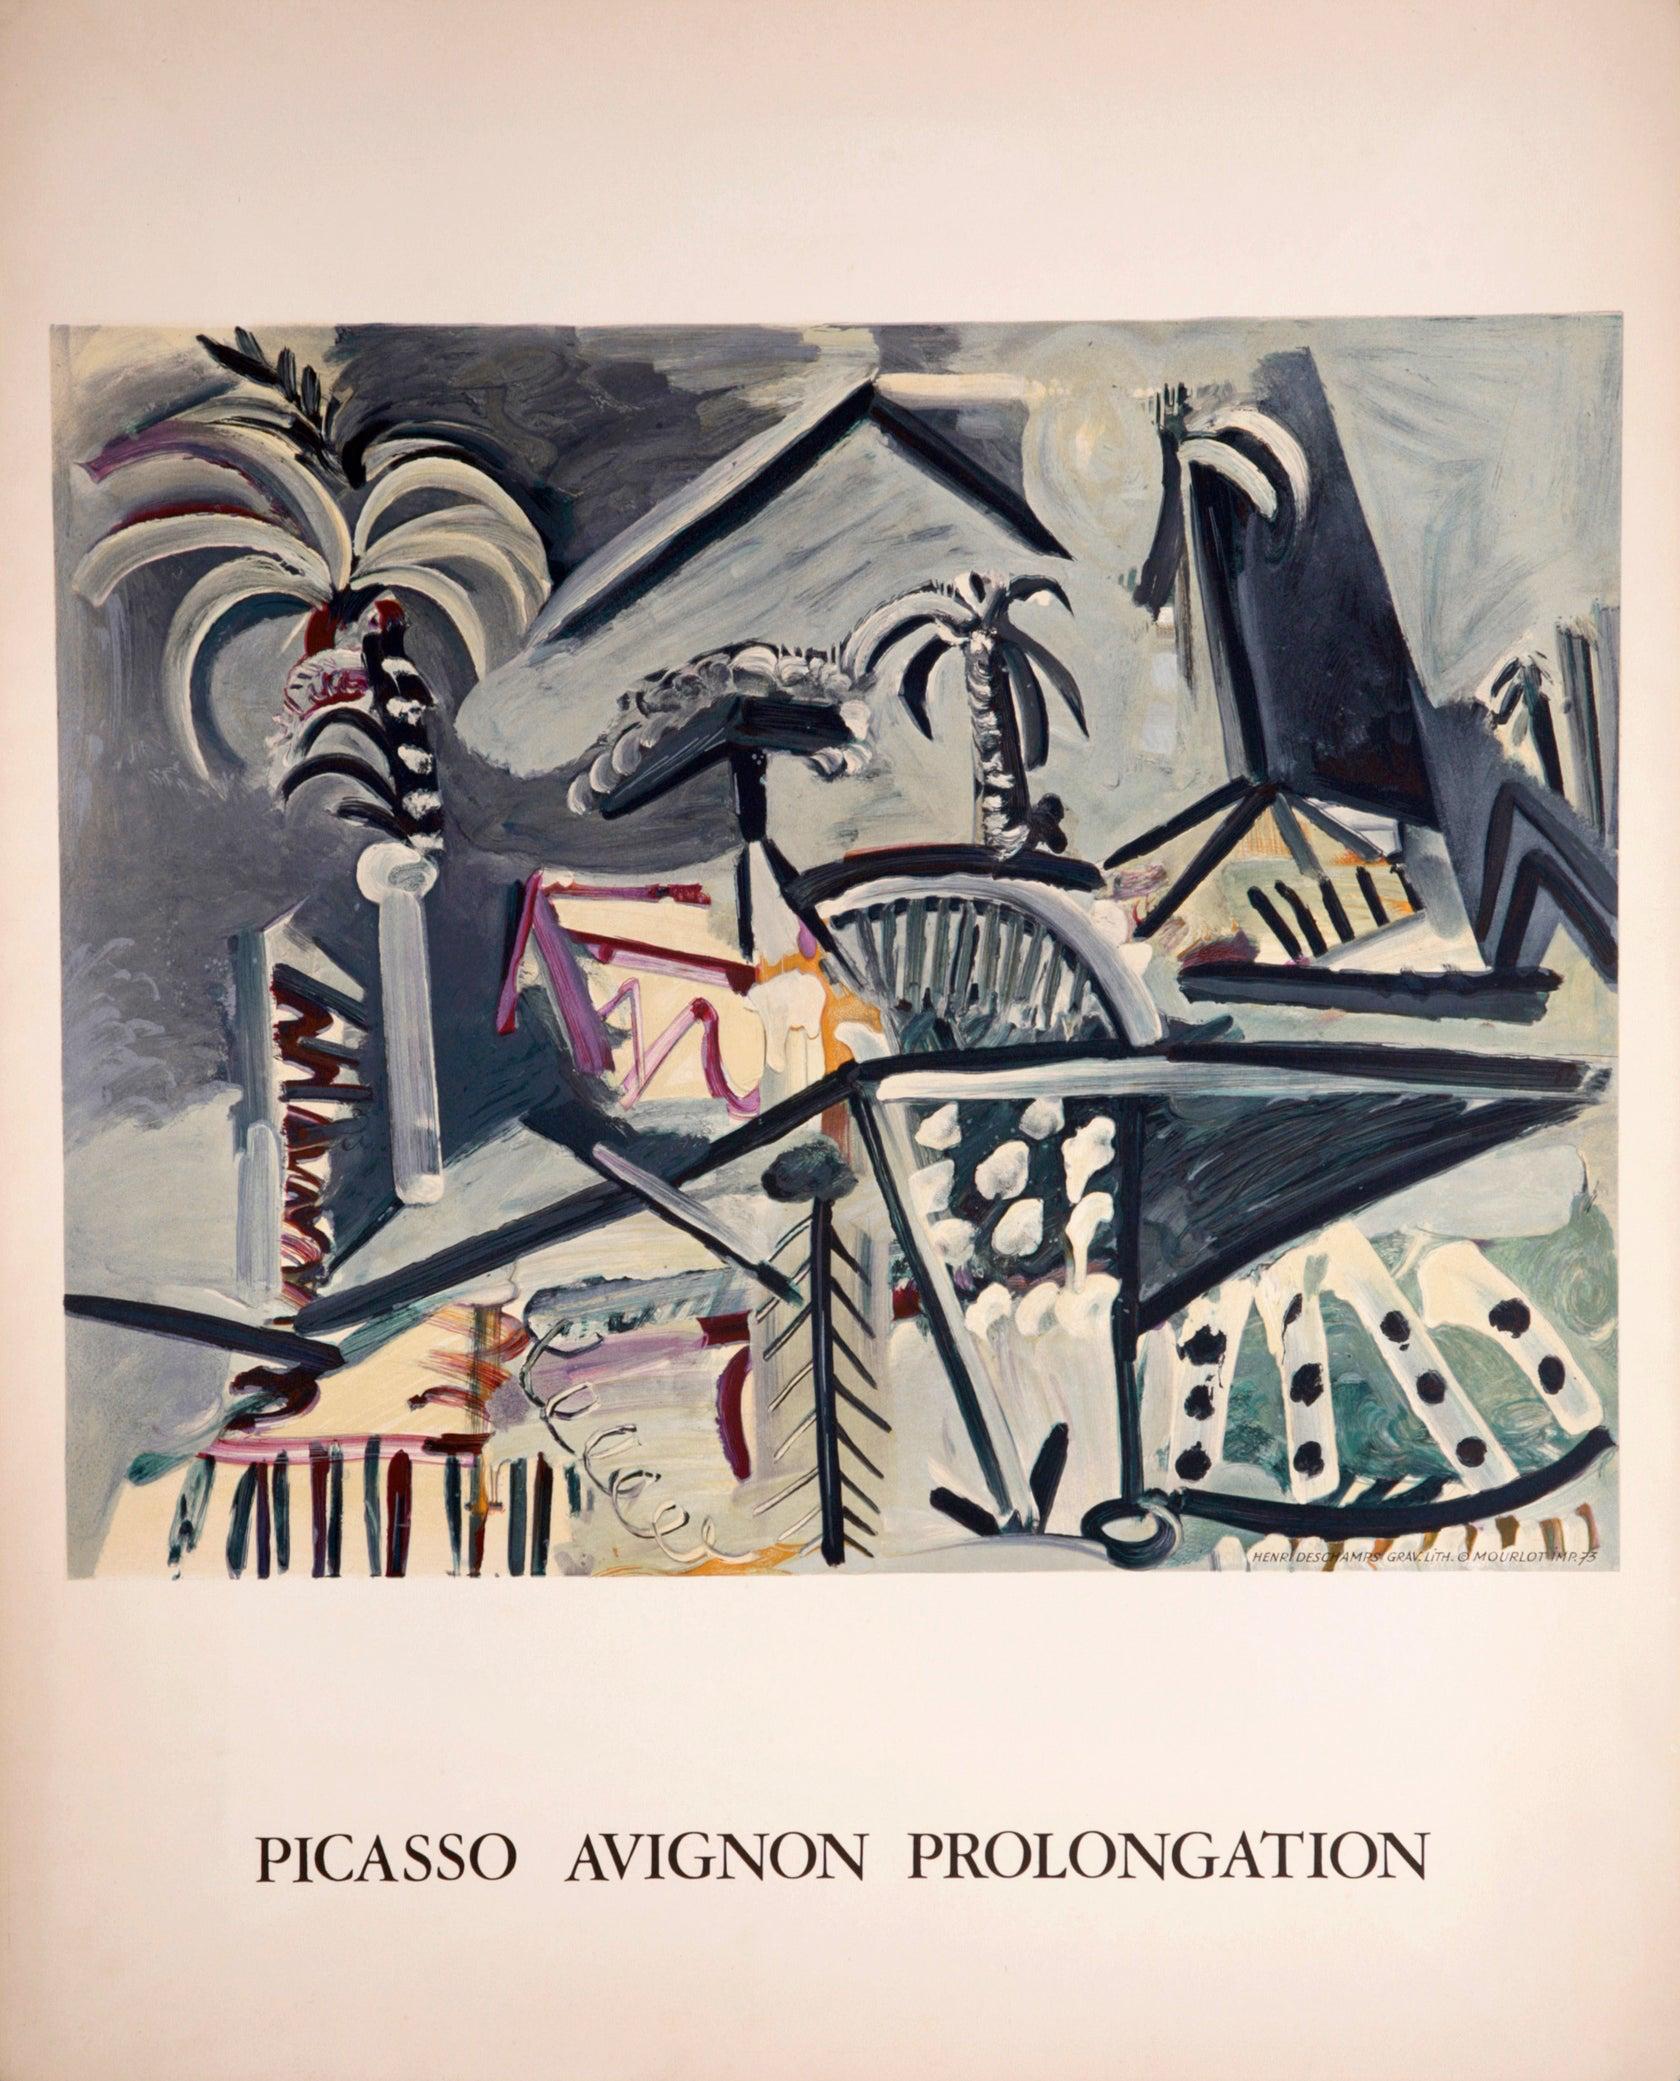 Picasso Avignon Prolongation von Pablo Picasso – Print von (after) Pablo Picasso